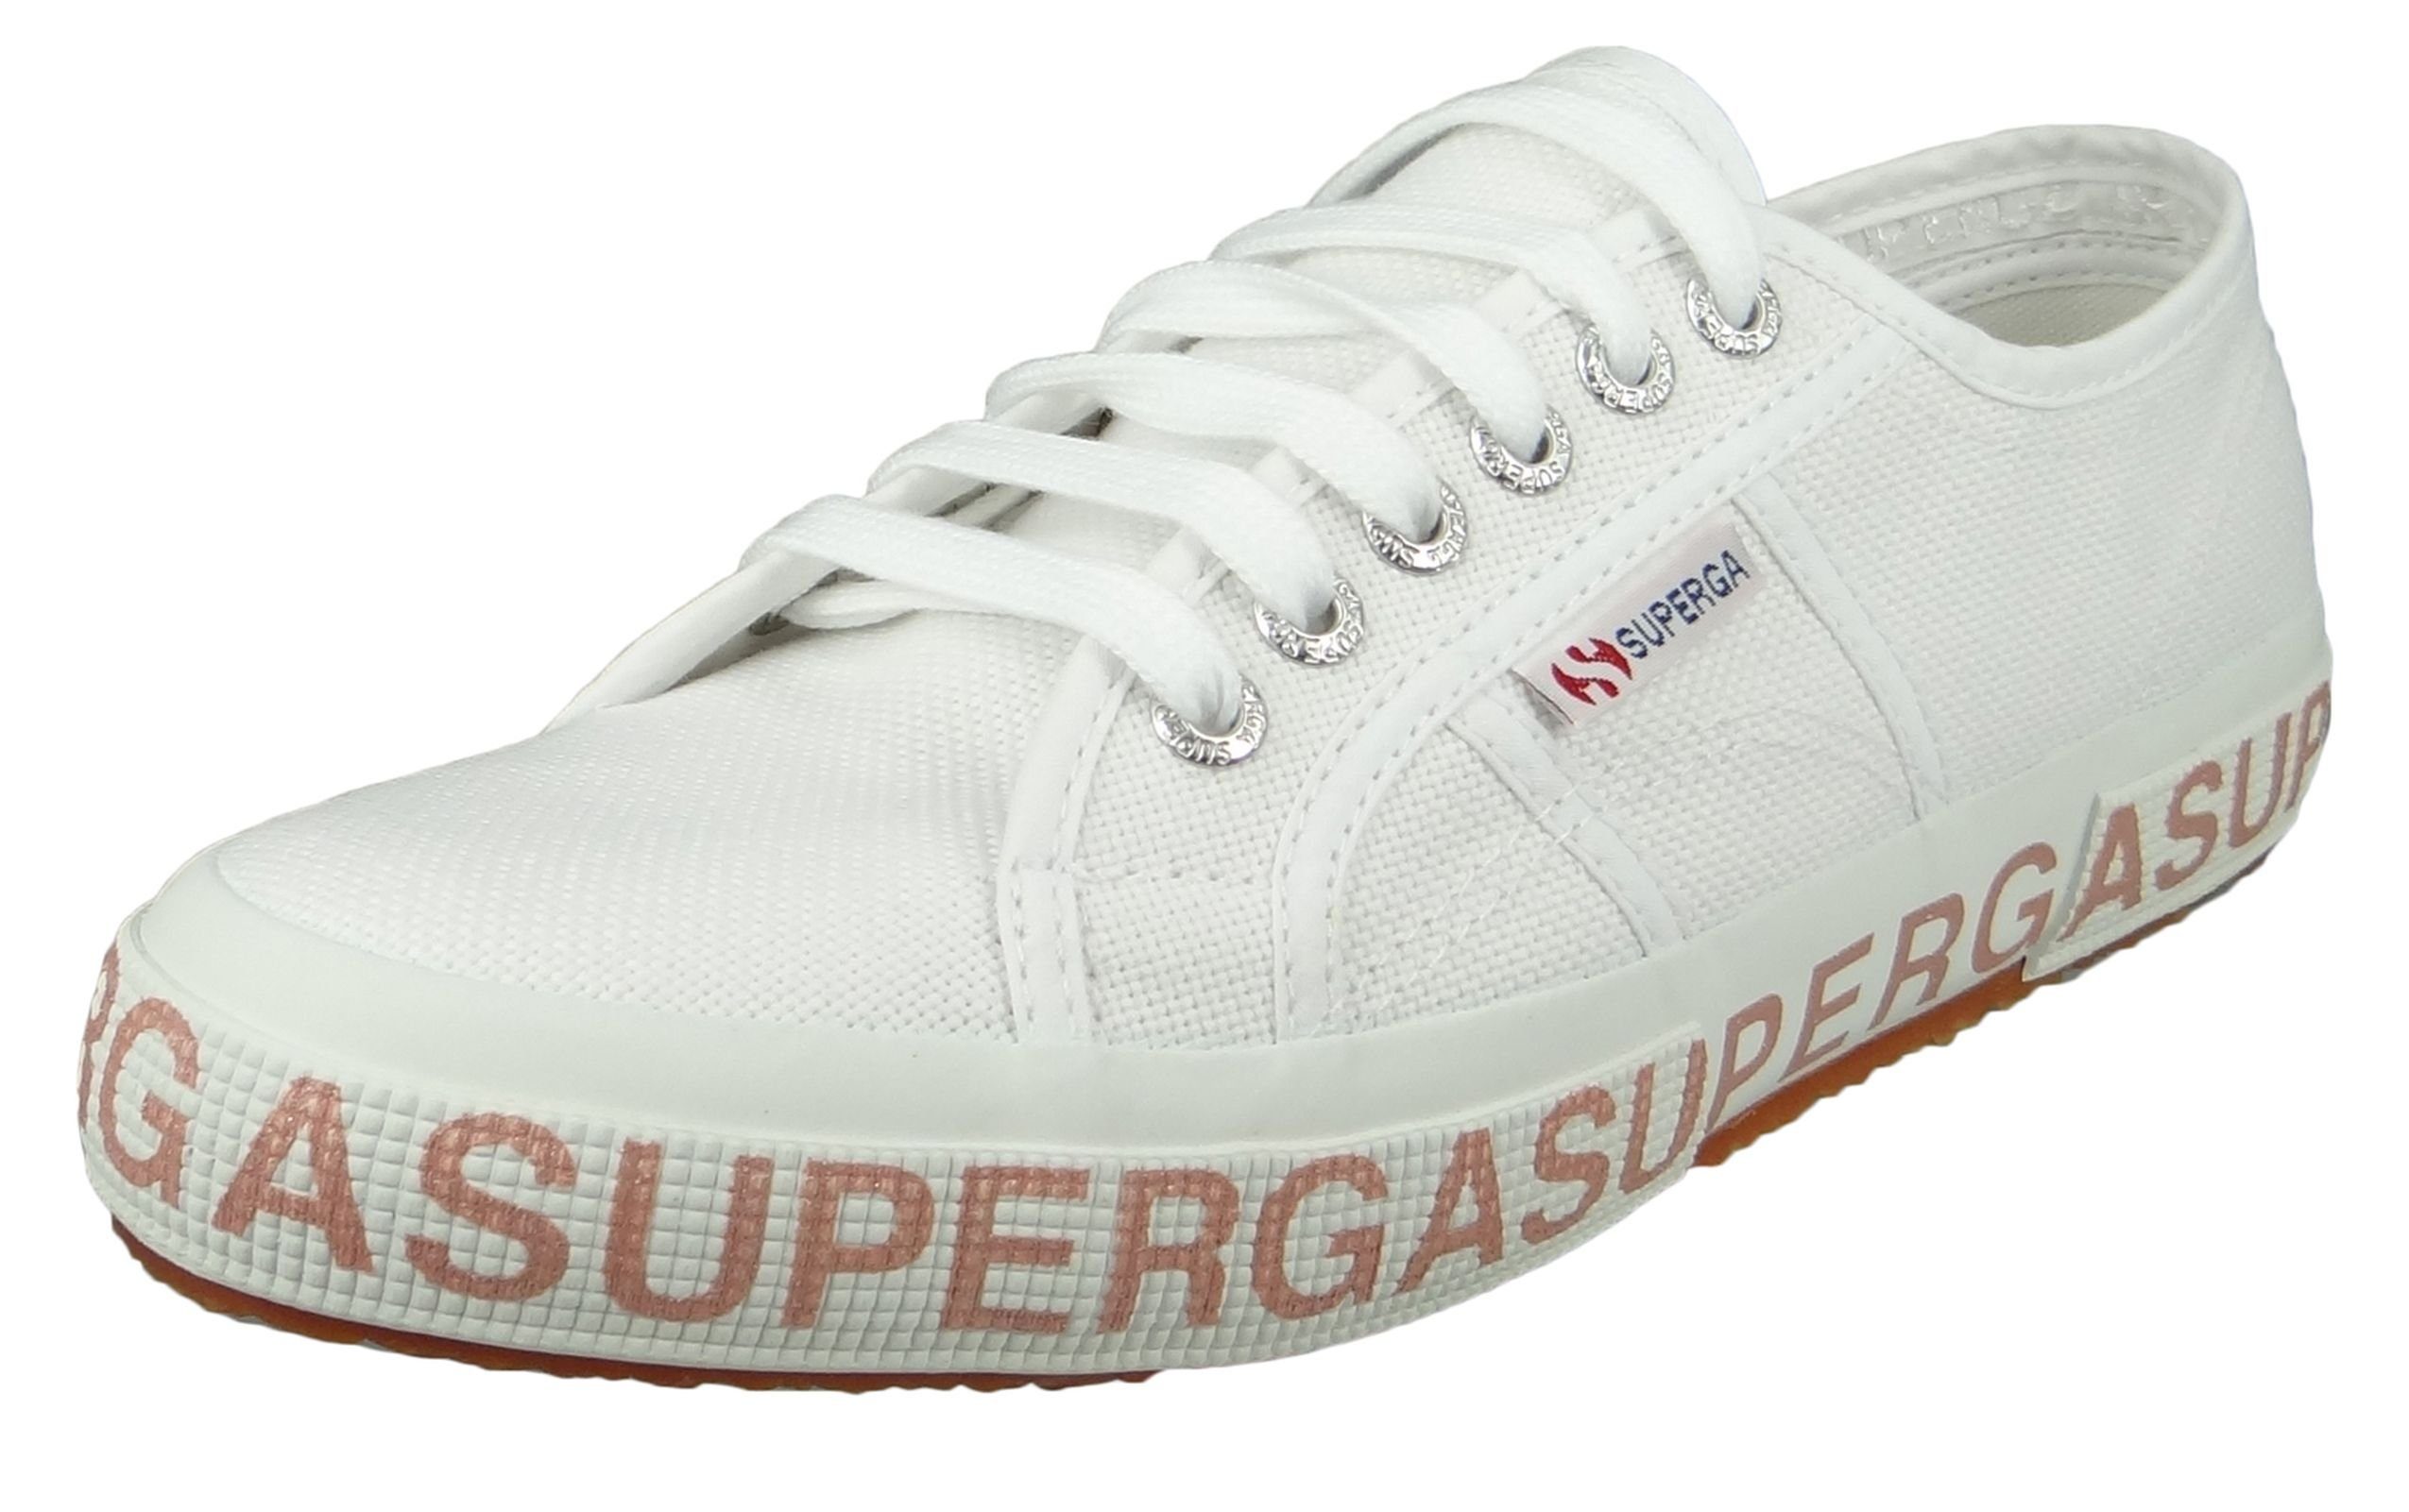 Sneaker Superga bronze A01 COTW S111XQW Glitterlettering white 2750